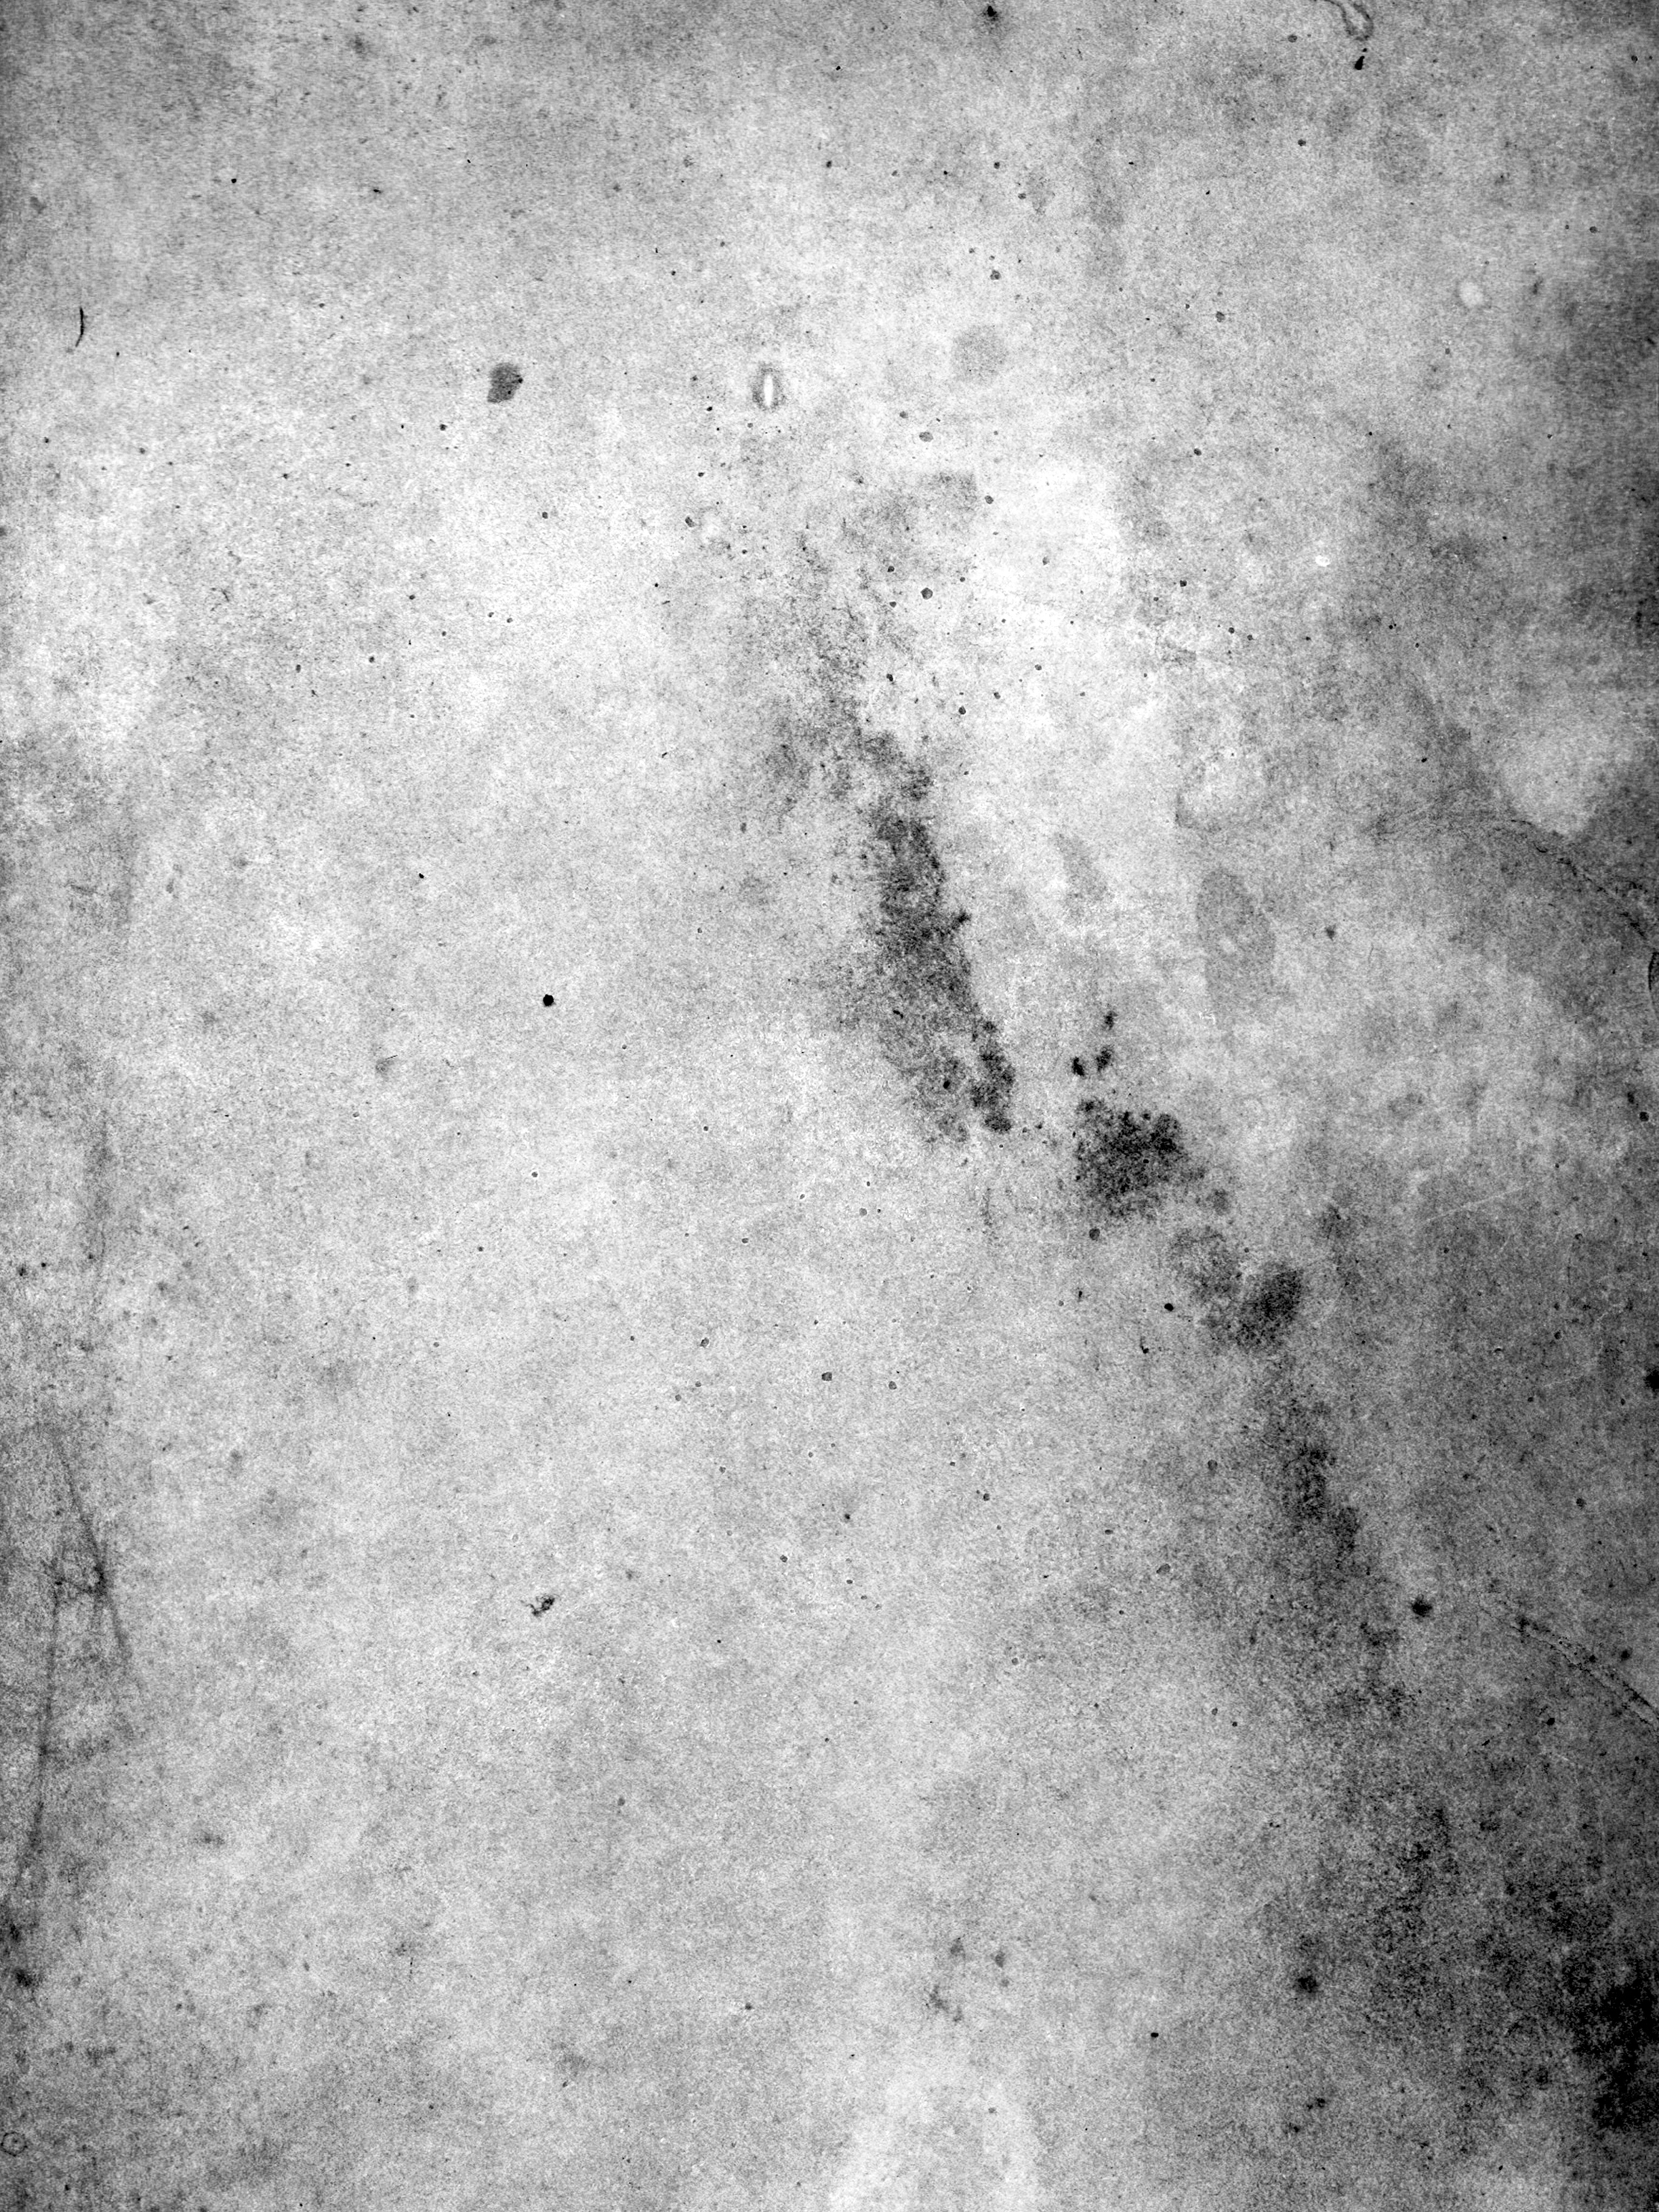 Black and white grunge texture photo